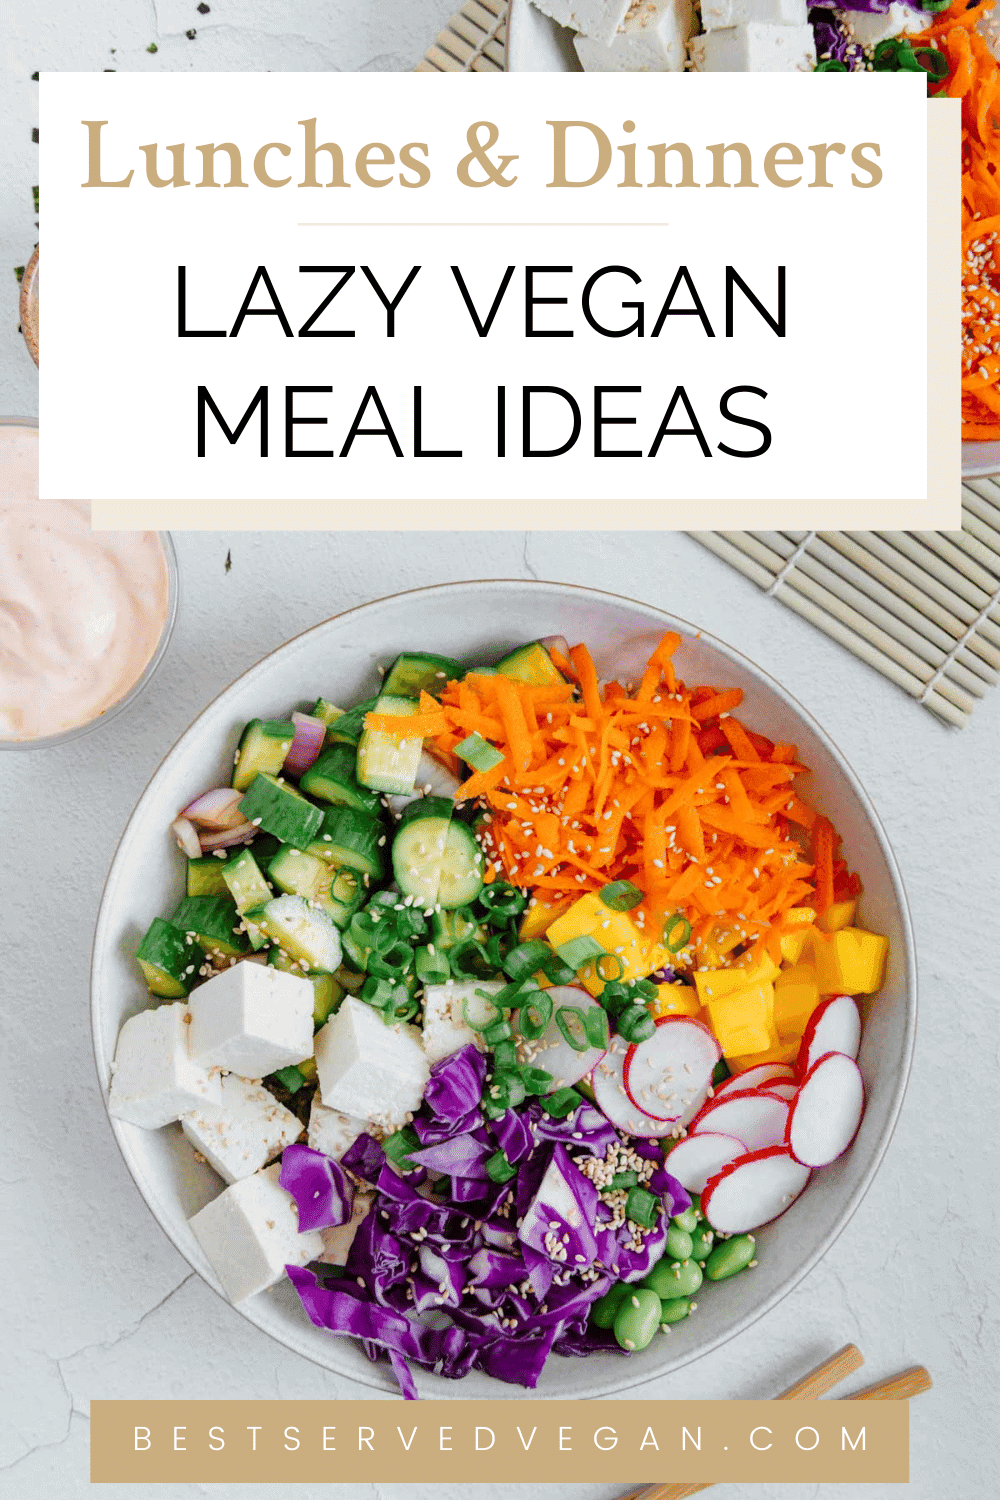 Lazy Vegan Meal Ideas - Best Served Vegan